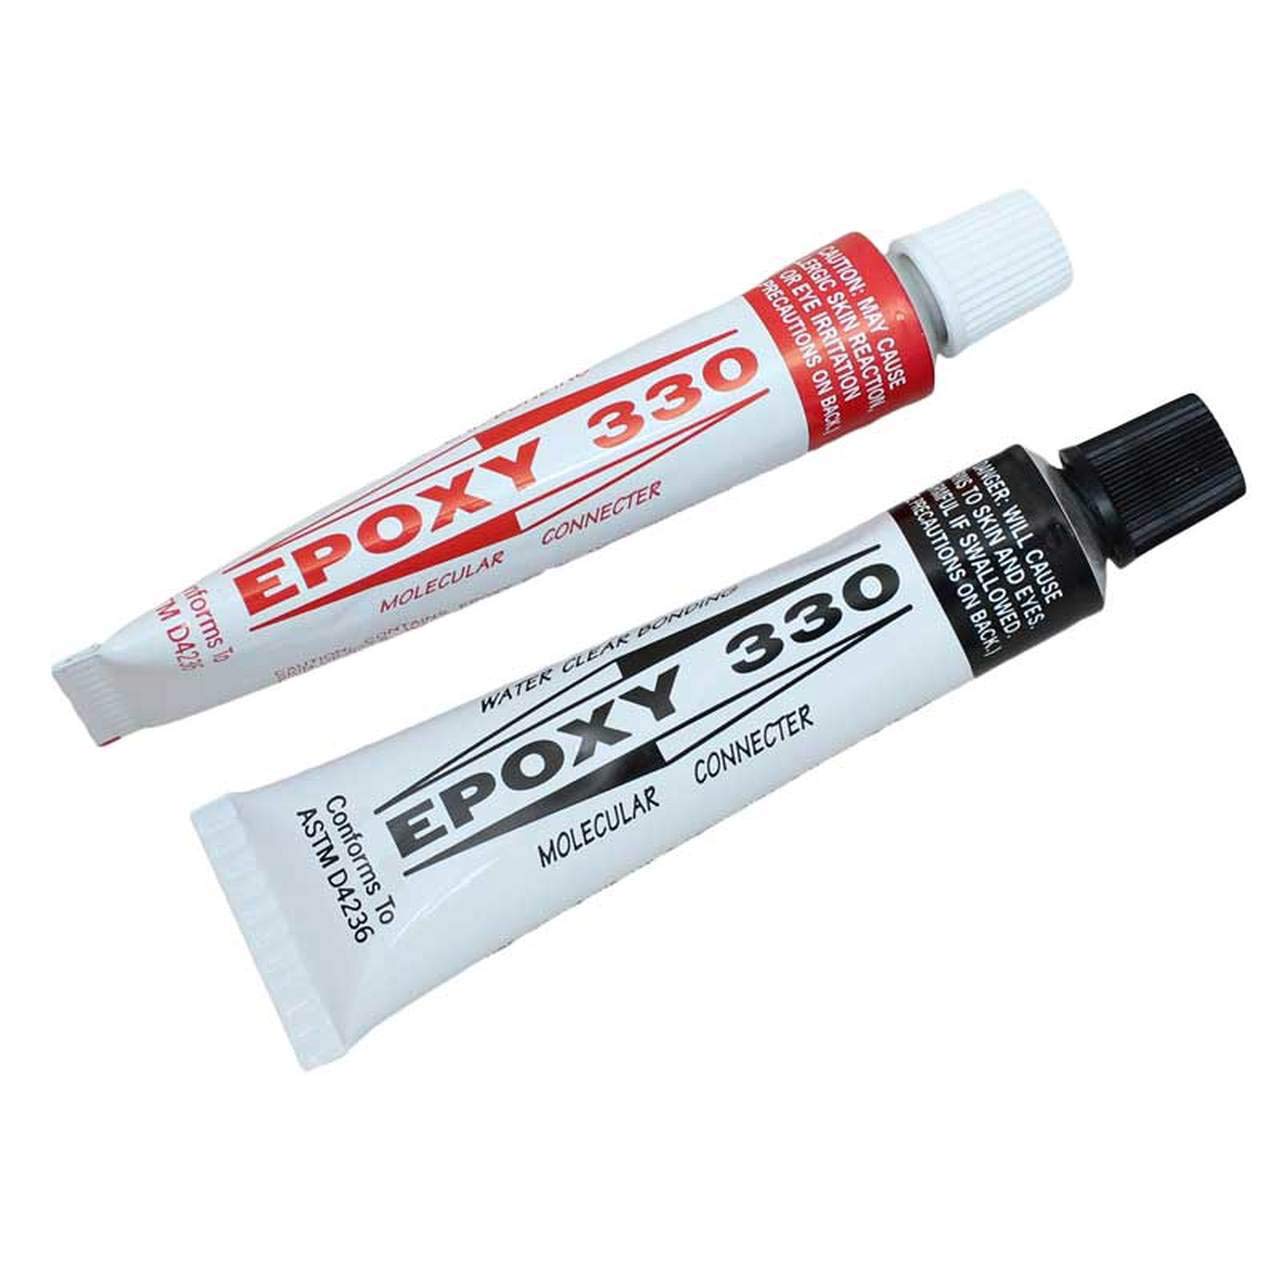 Water Clear Bonding Epoxy 330 1 oz Pkg of 8